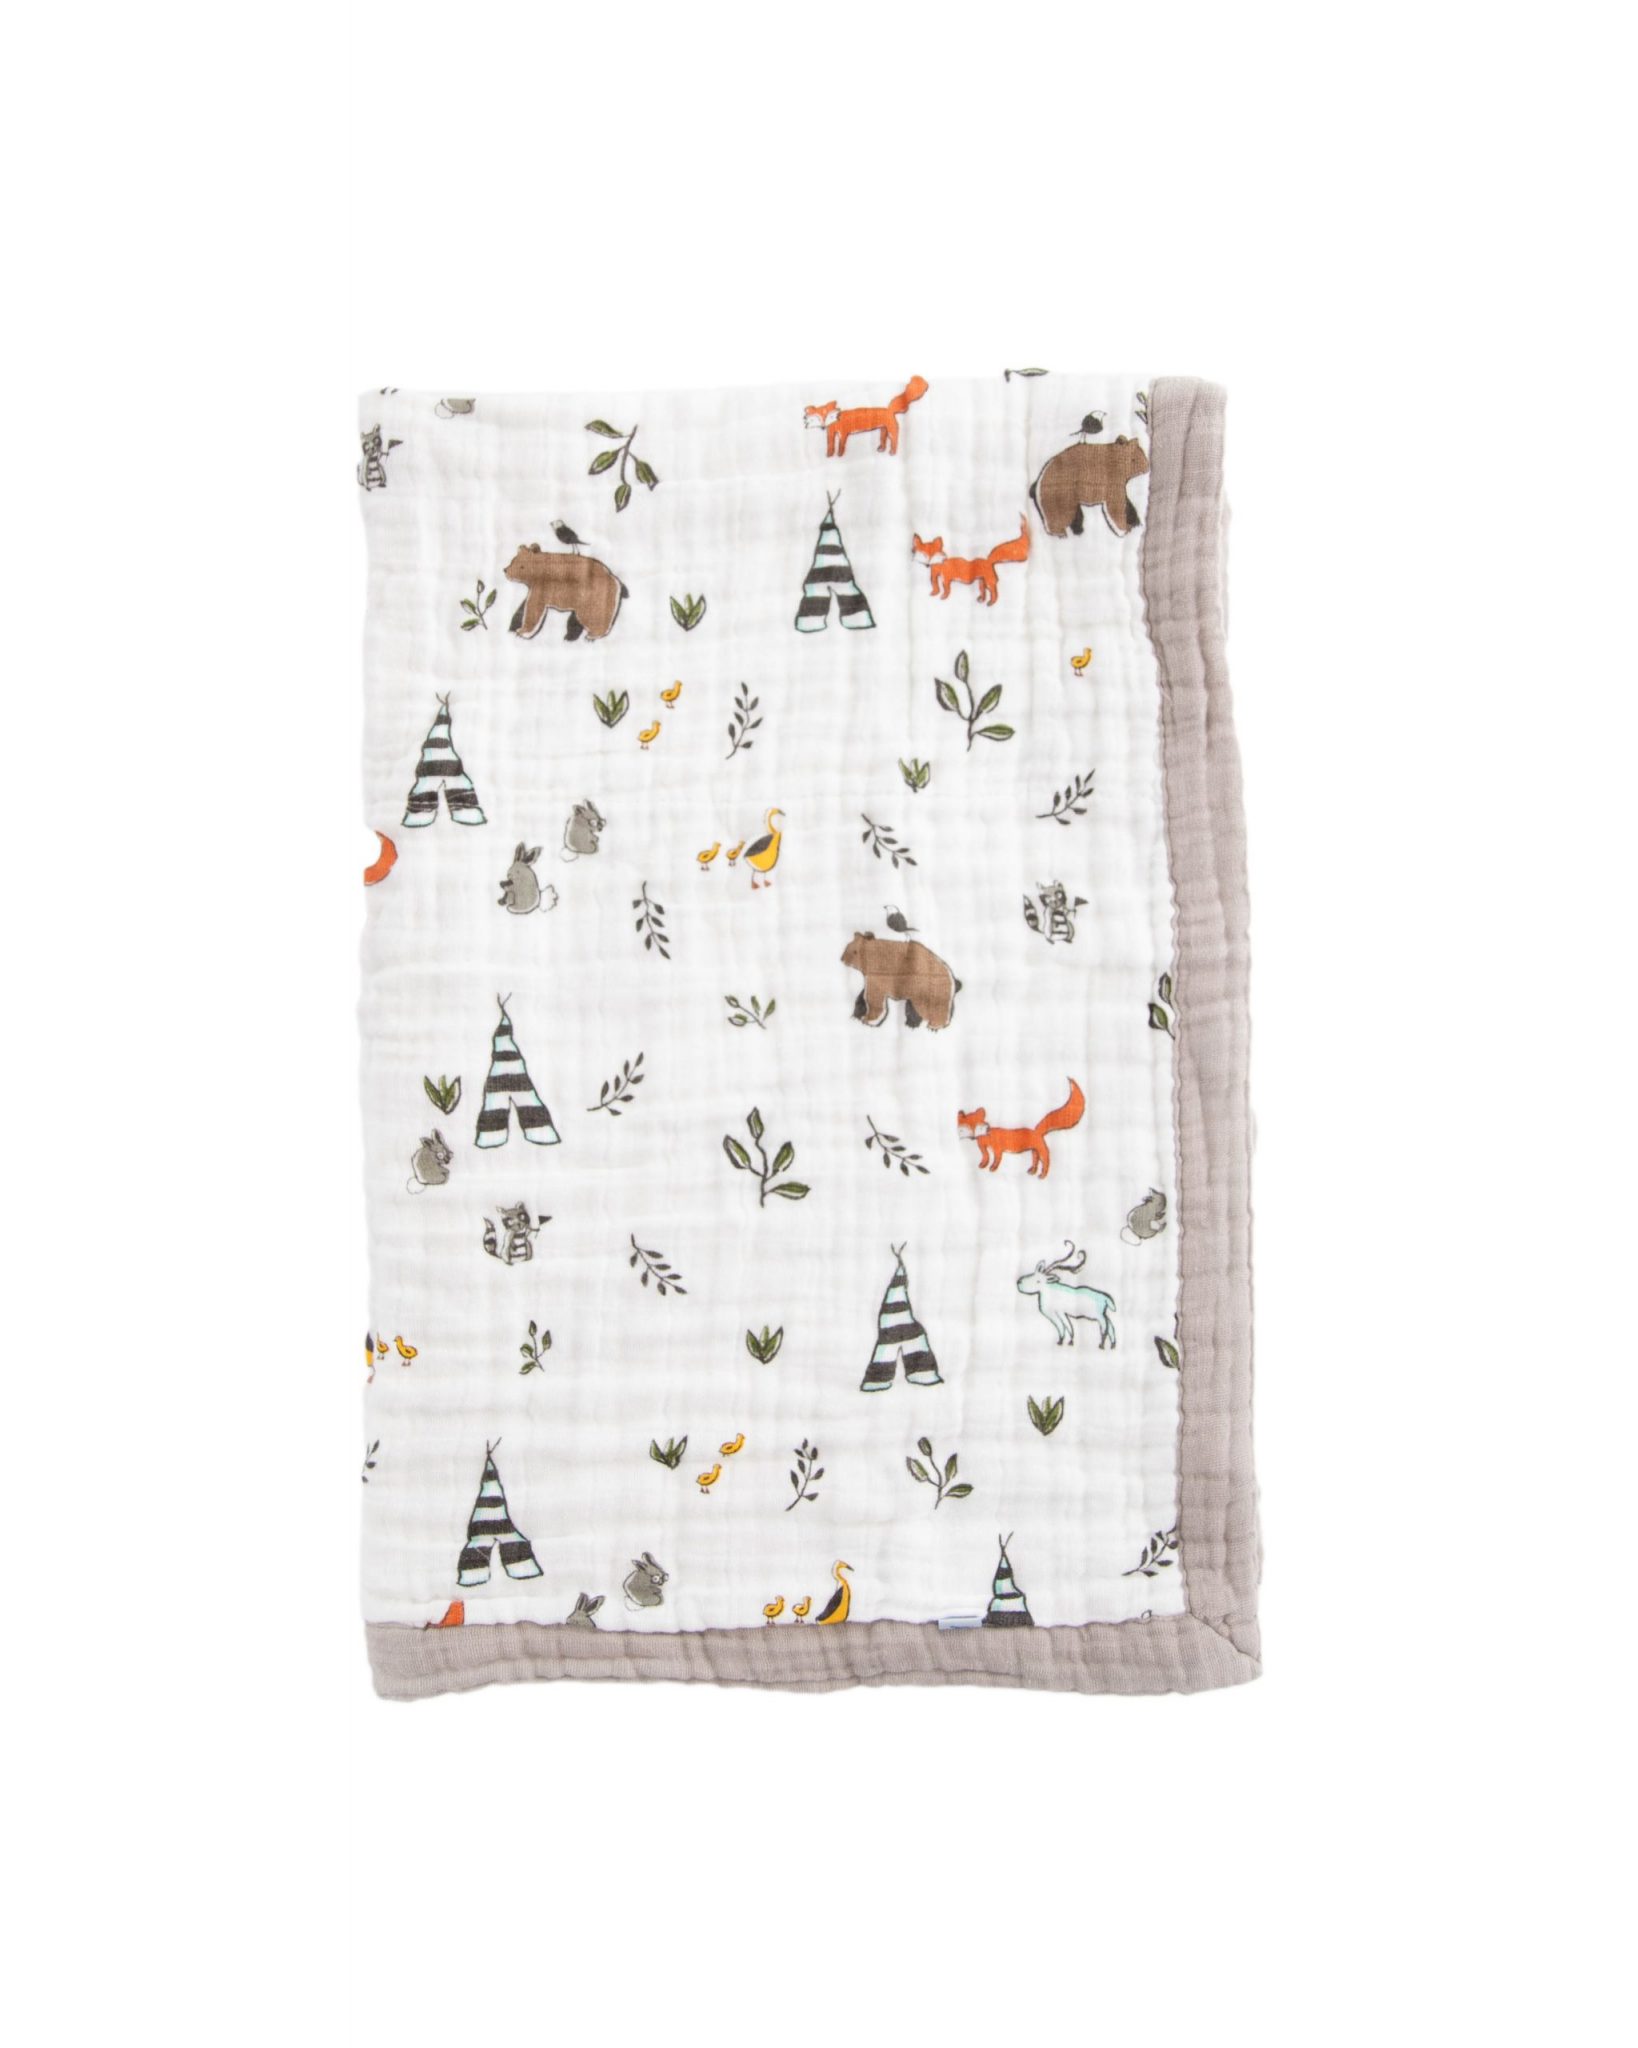 Cotton Muslin Baby Blanket - Forest Friends